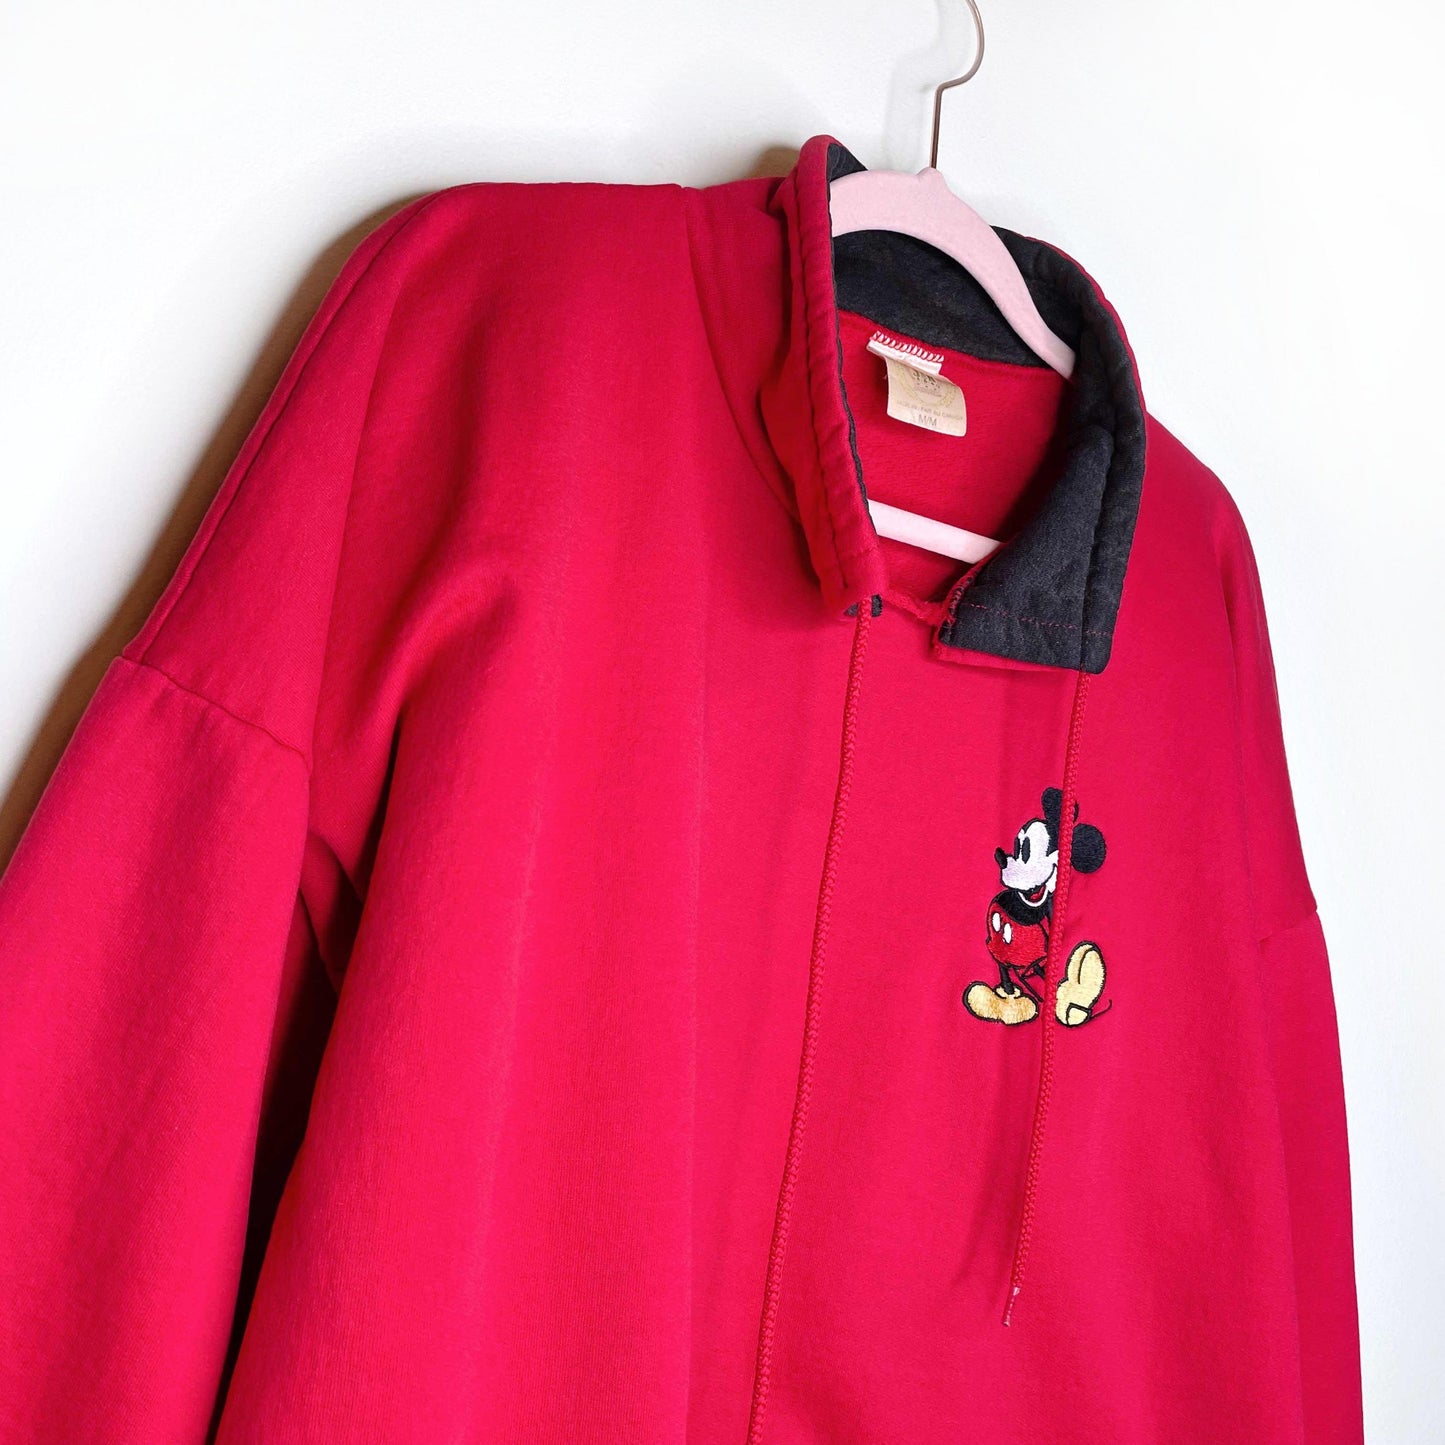 vintage red collared drawstring mickey mouse sweatshirt - size medium